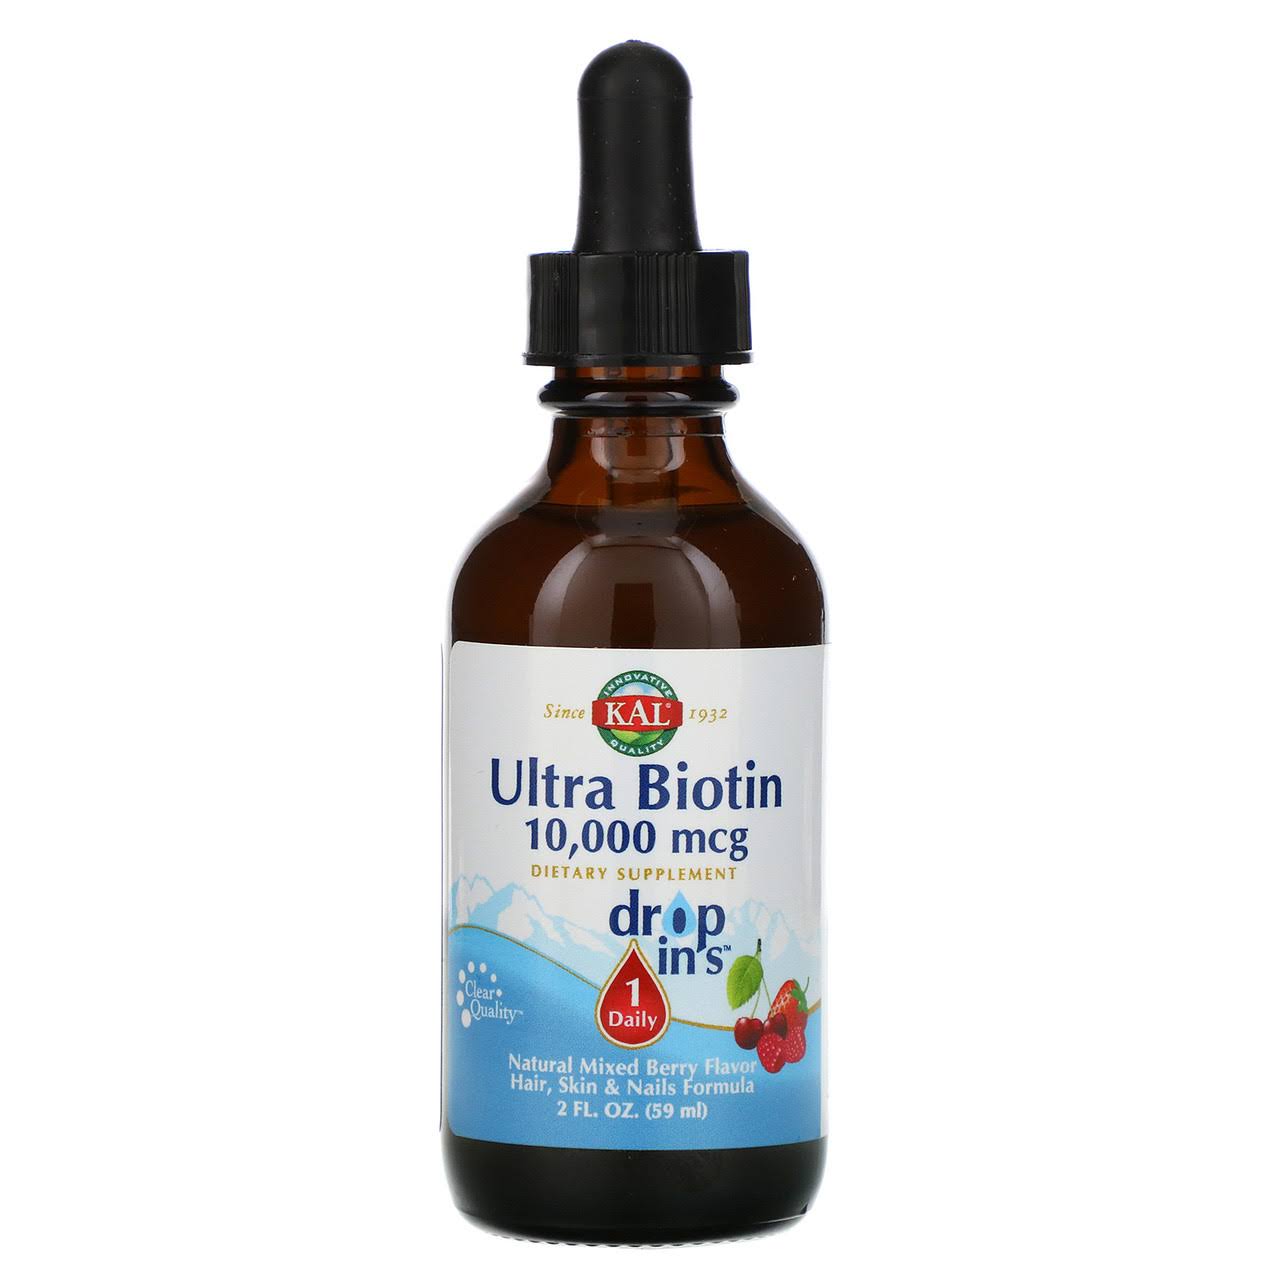 Kal Ultra Biotin - Mixed Berry - 10,000 MCG - 2 FL oz